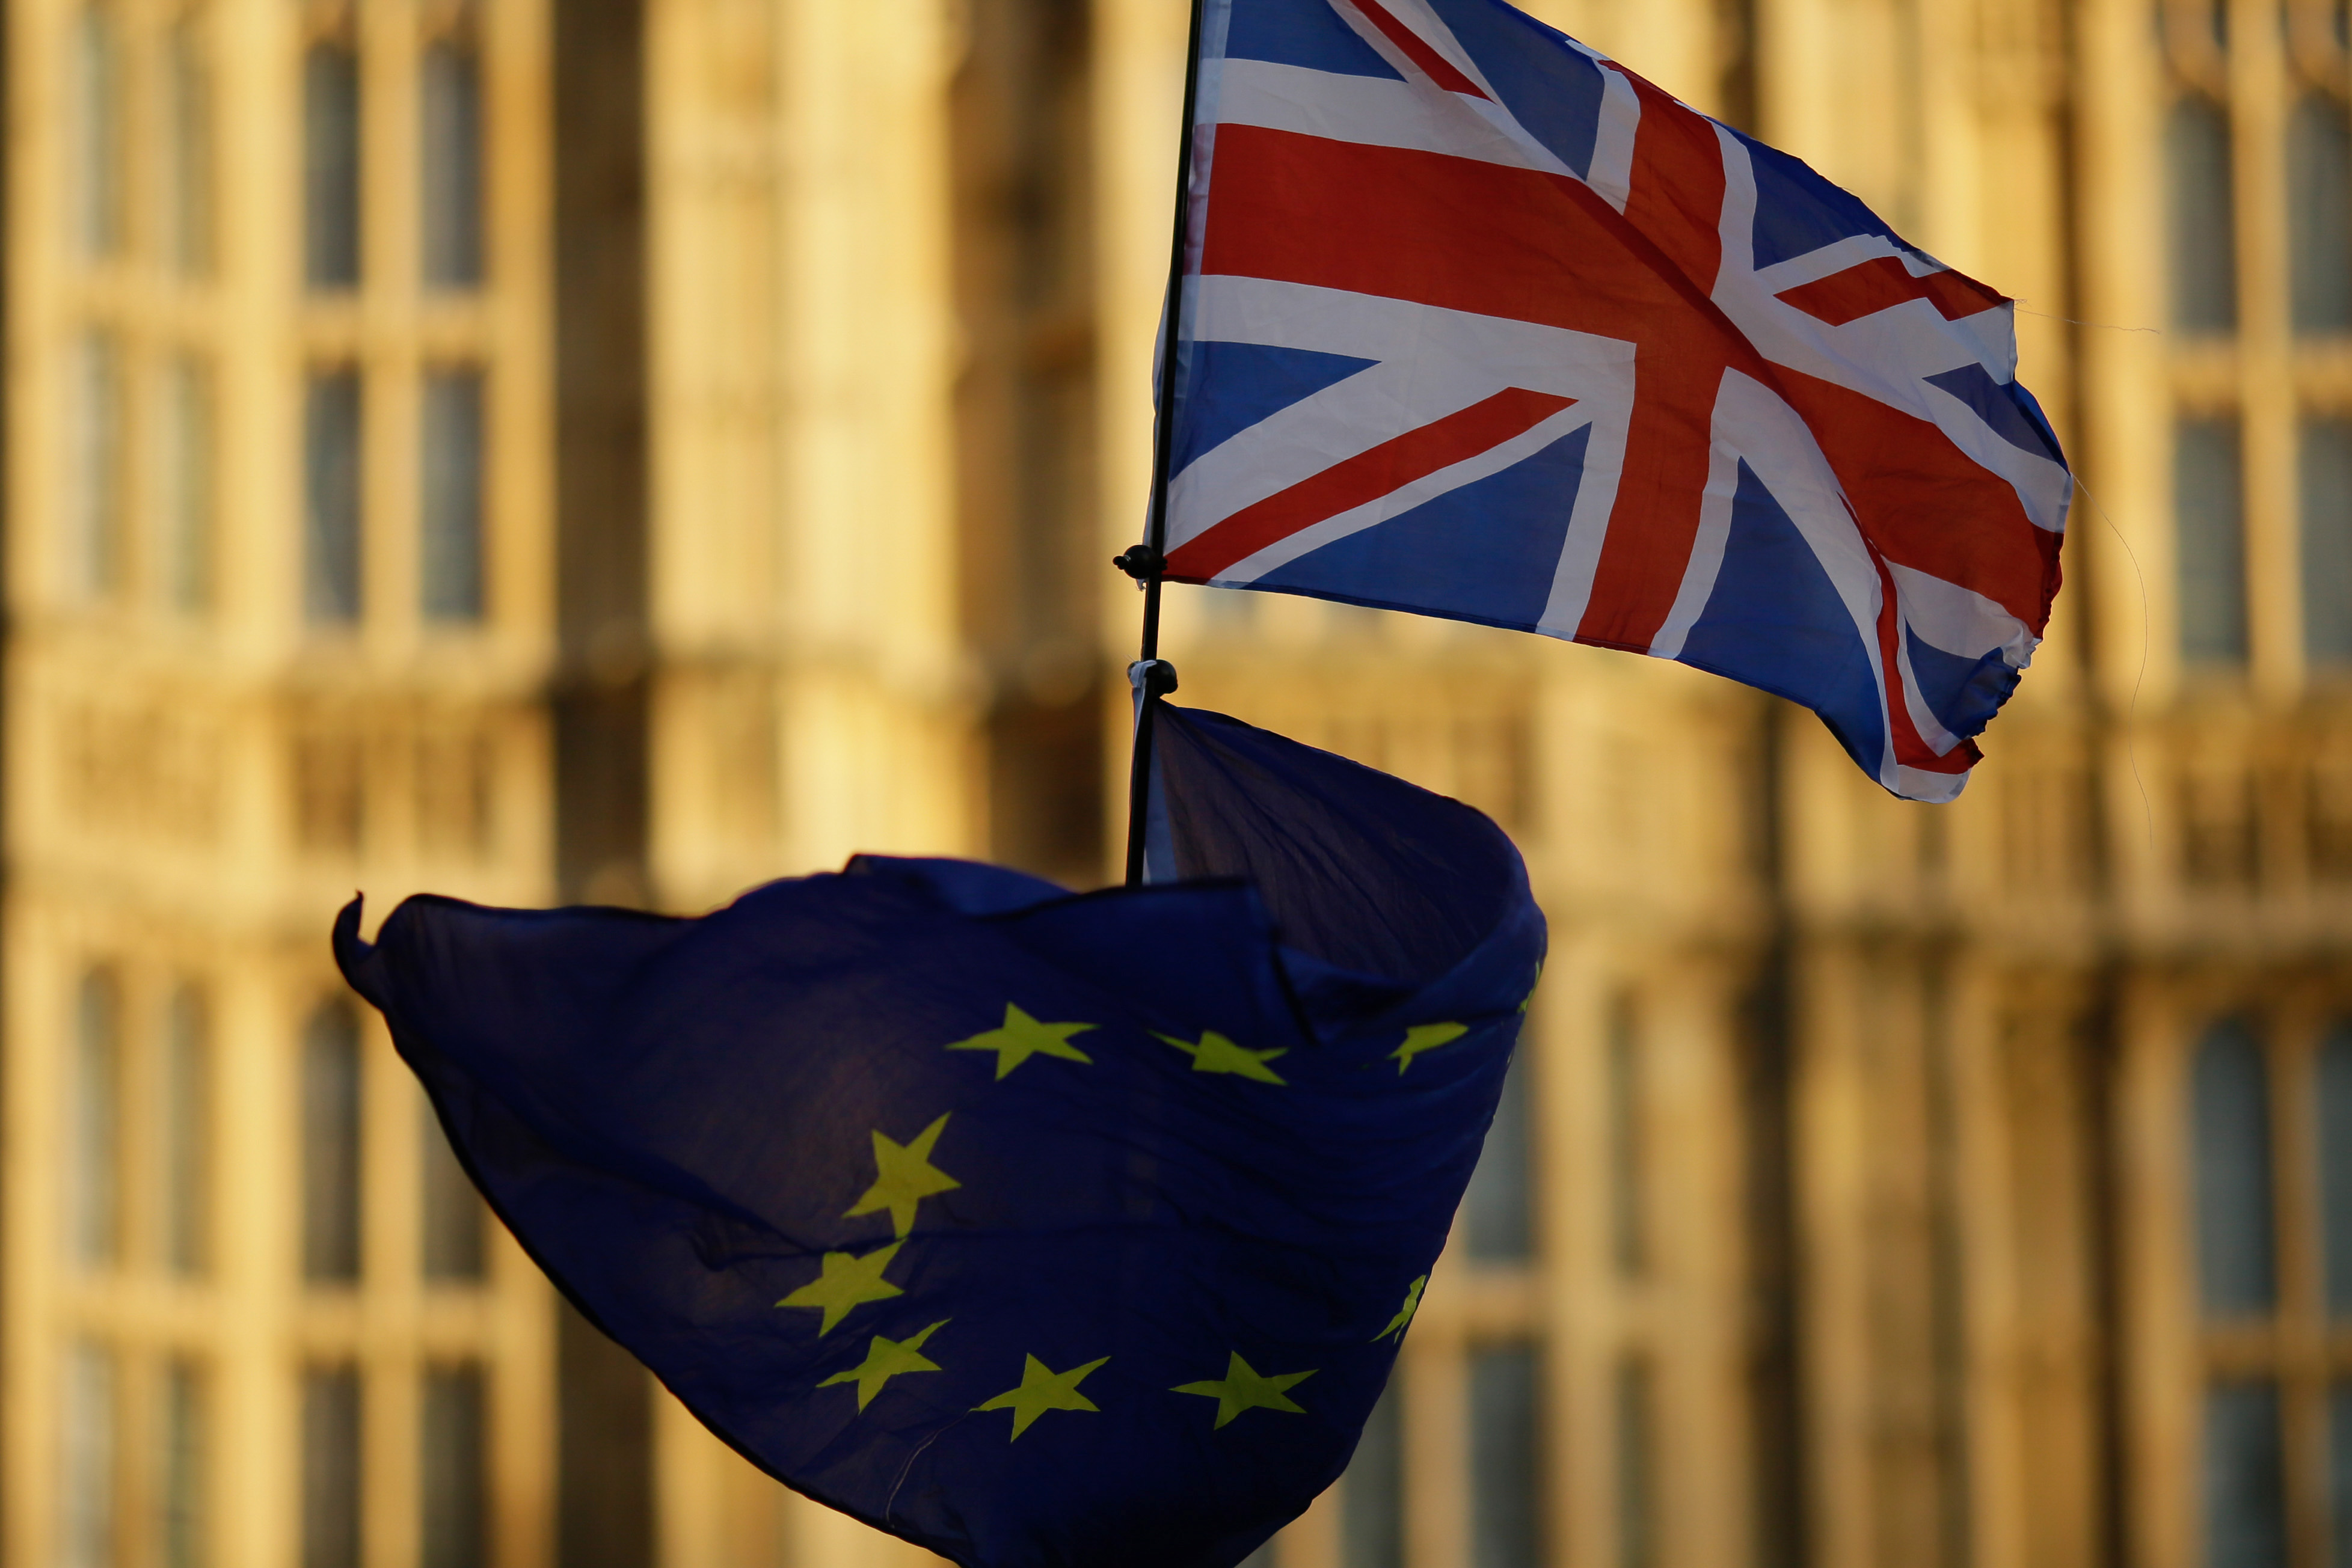 Top advisor to UK PM Johnson denies he said EU talks were a sham